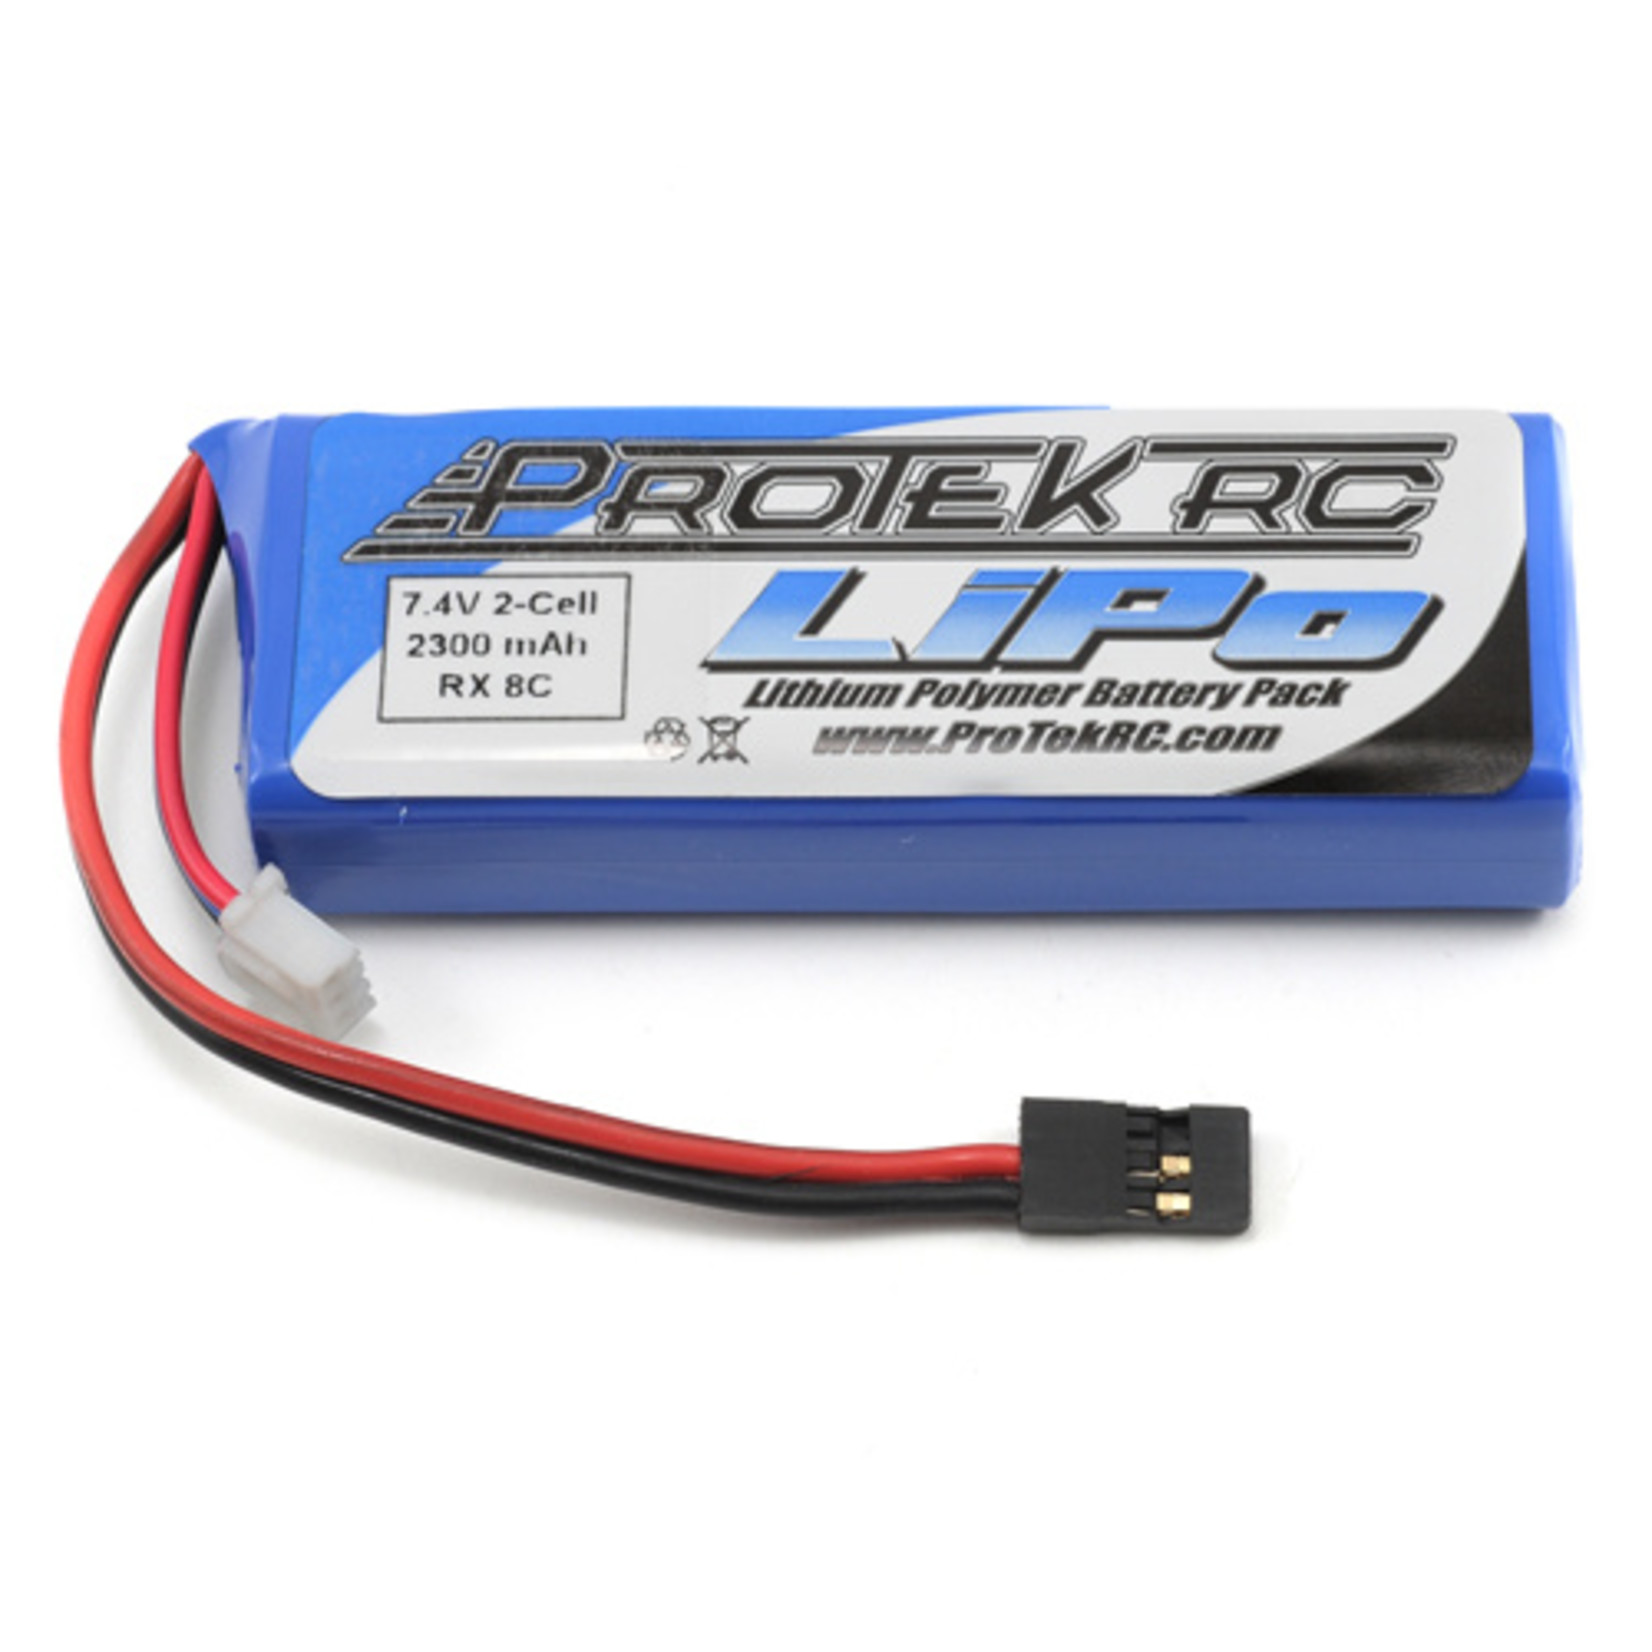 Protek R/C PTK5196 - 2S 7.4V 2300mAh LiPo Flat Receiver Battery Pack